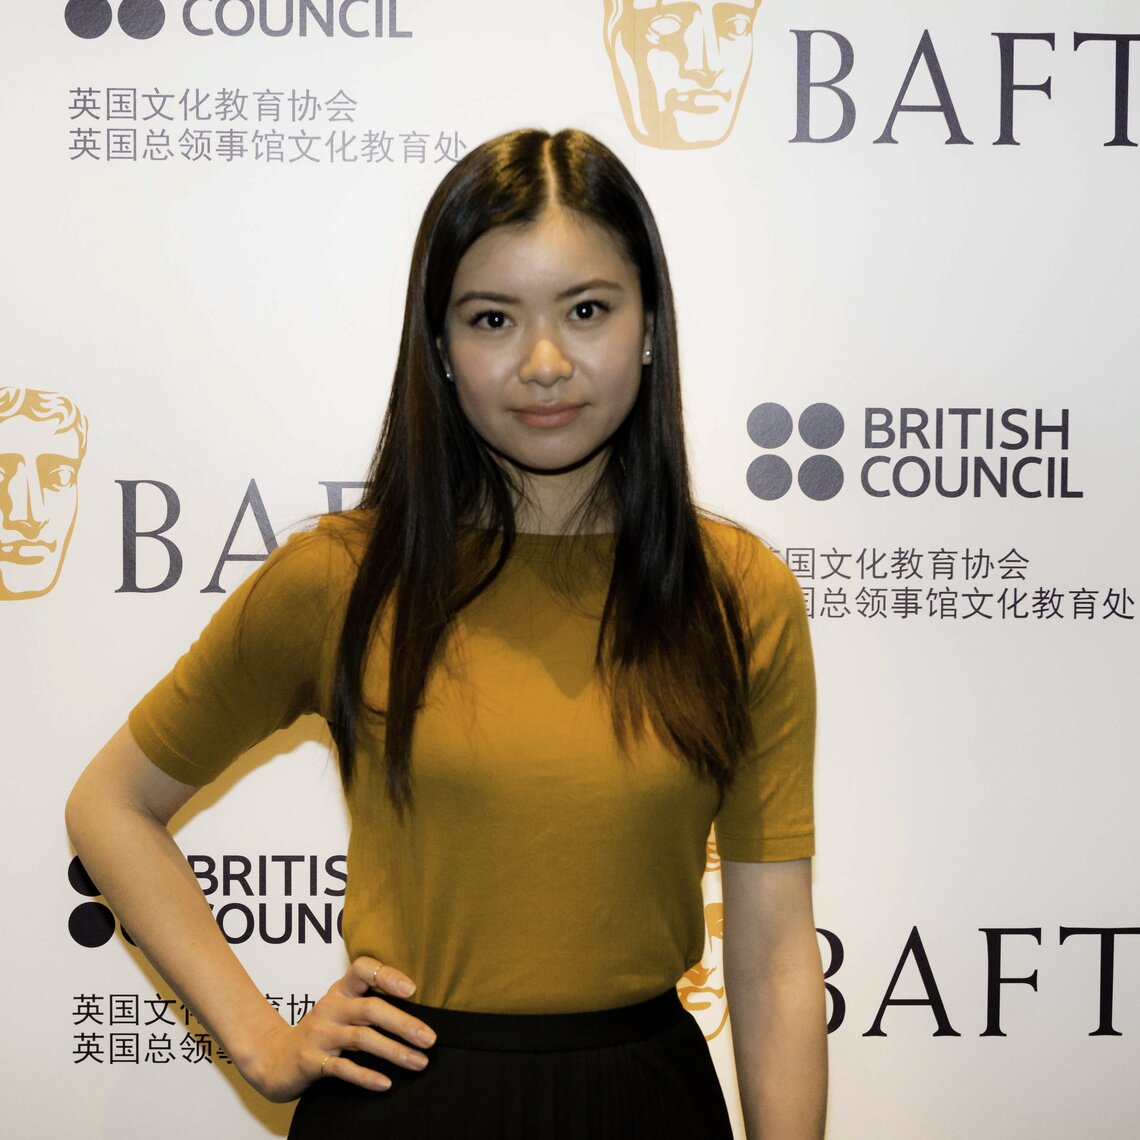 Event: BAFTA and British Council Afternoon TeaDate: Sunday 18 June 2017Venue: Salon de Ning, The Peninsula Hotel, Shanghai-Area: Portraits 